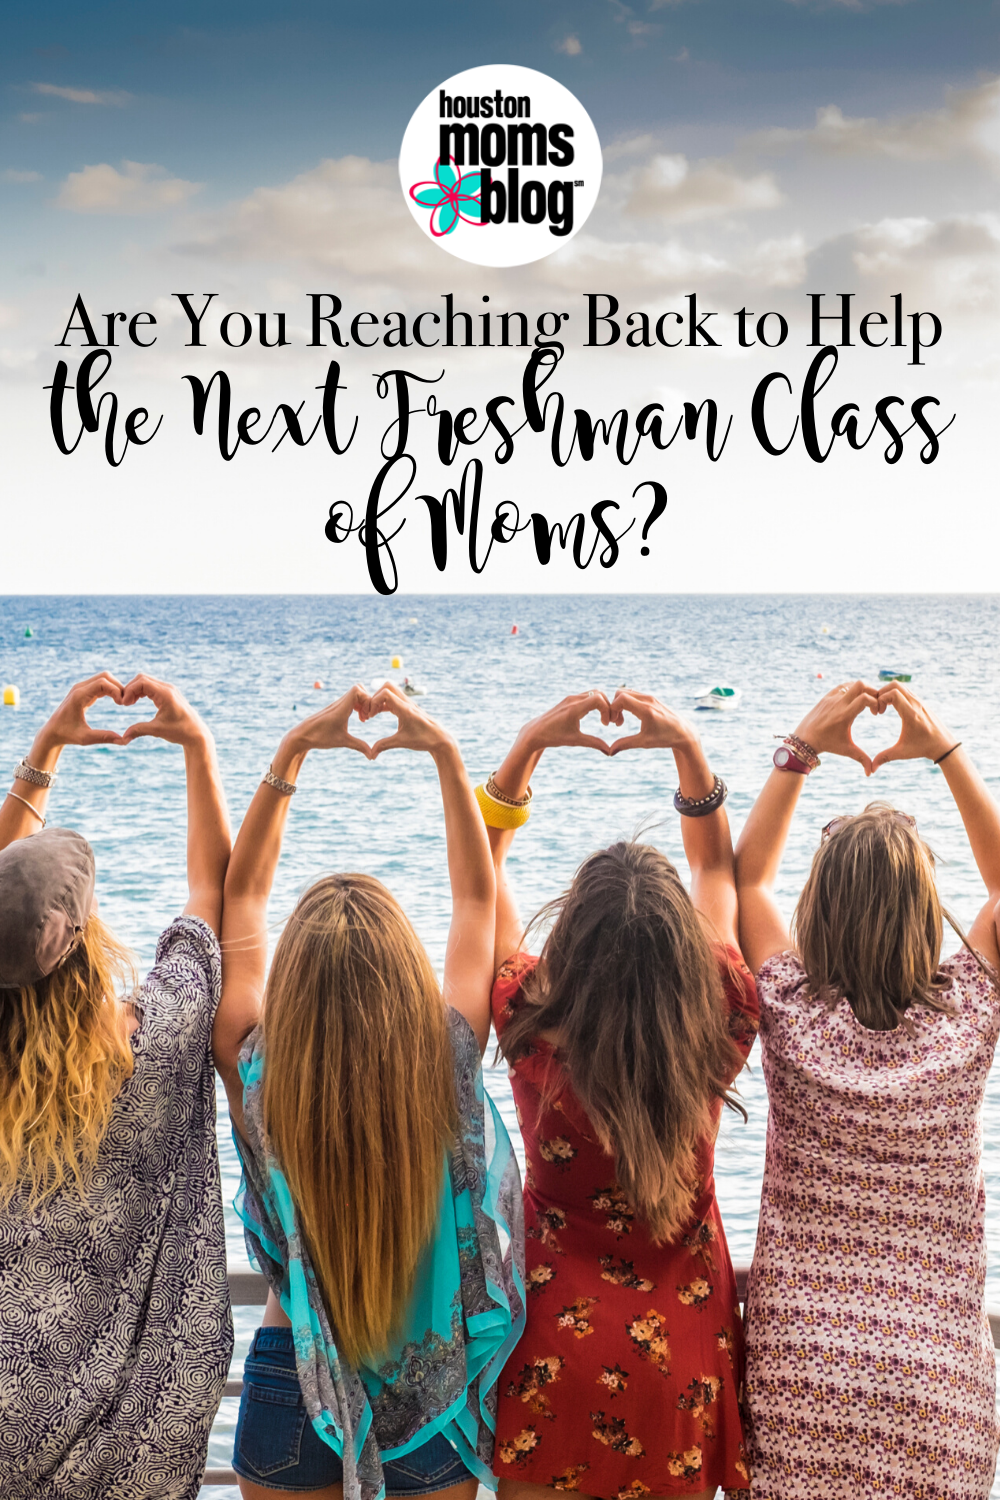 Houston Moms Blog "Are You Reaching Back to Help the Next Freshman Class of Moms?" #houstonmomsblog #momsaroundhouston